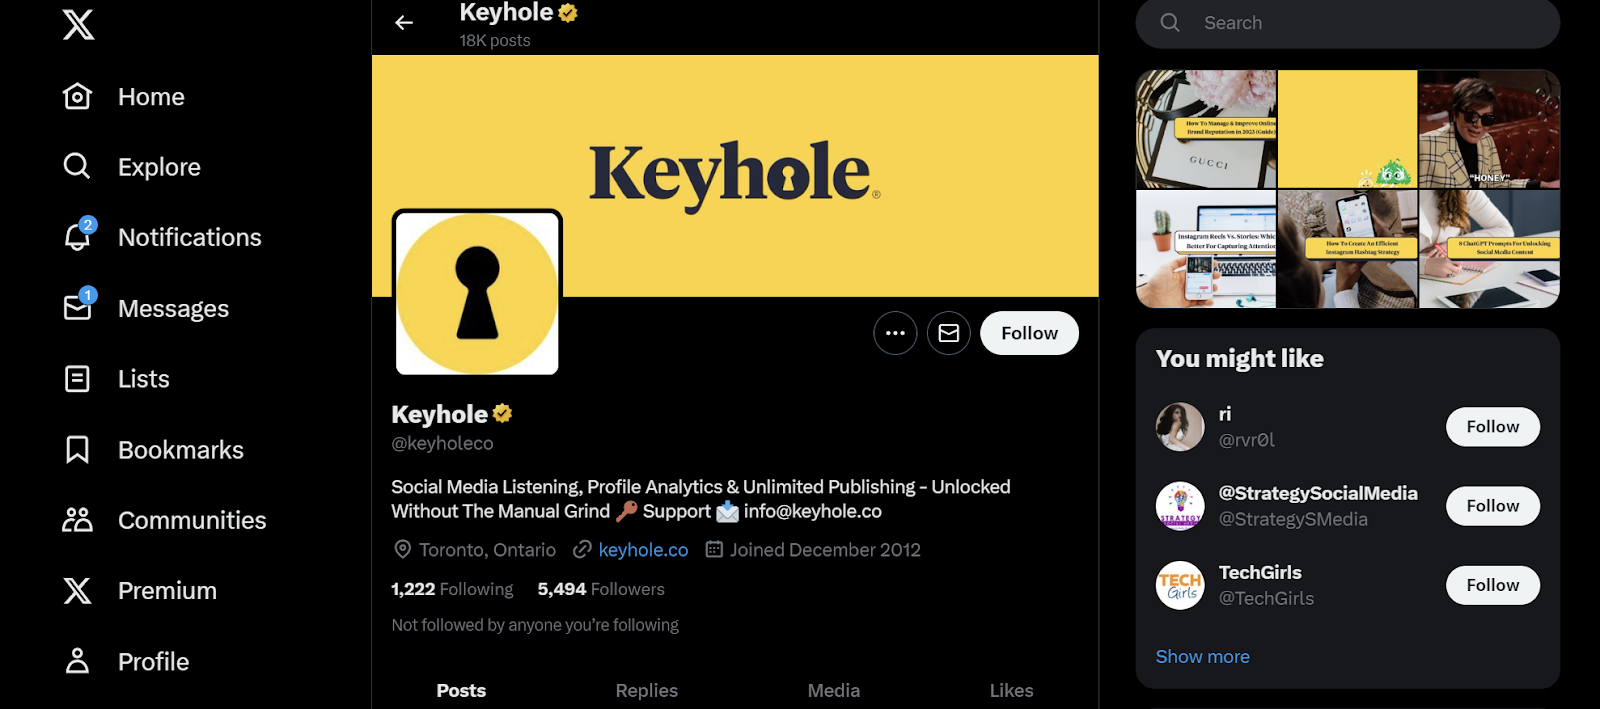 Keyhole Twitter Homepage